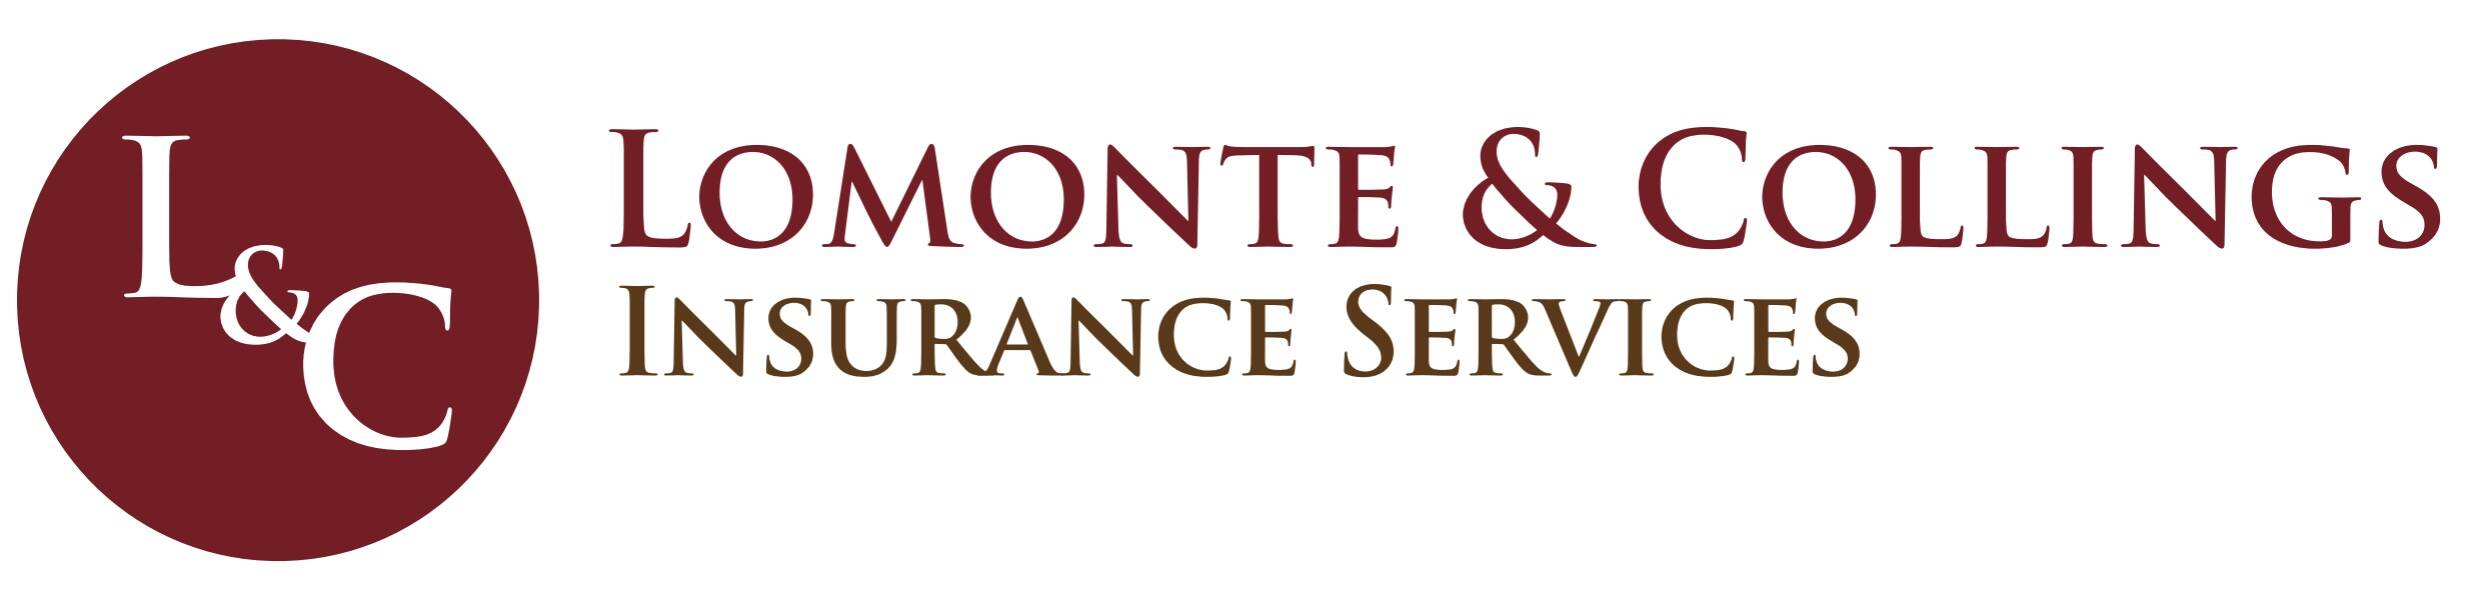 Lomonte & Collings Insurance Services